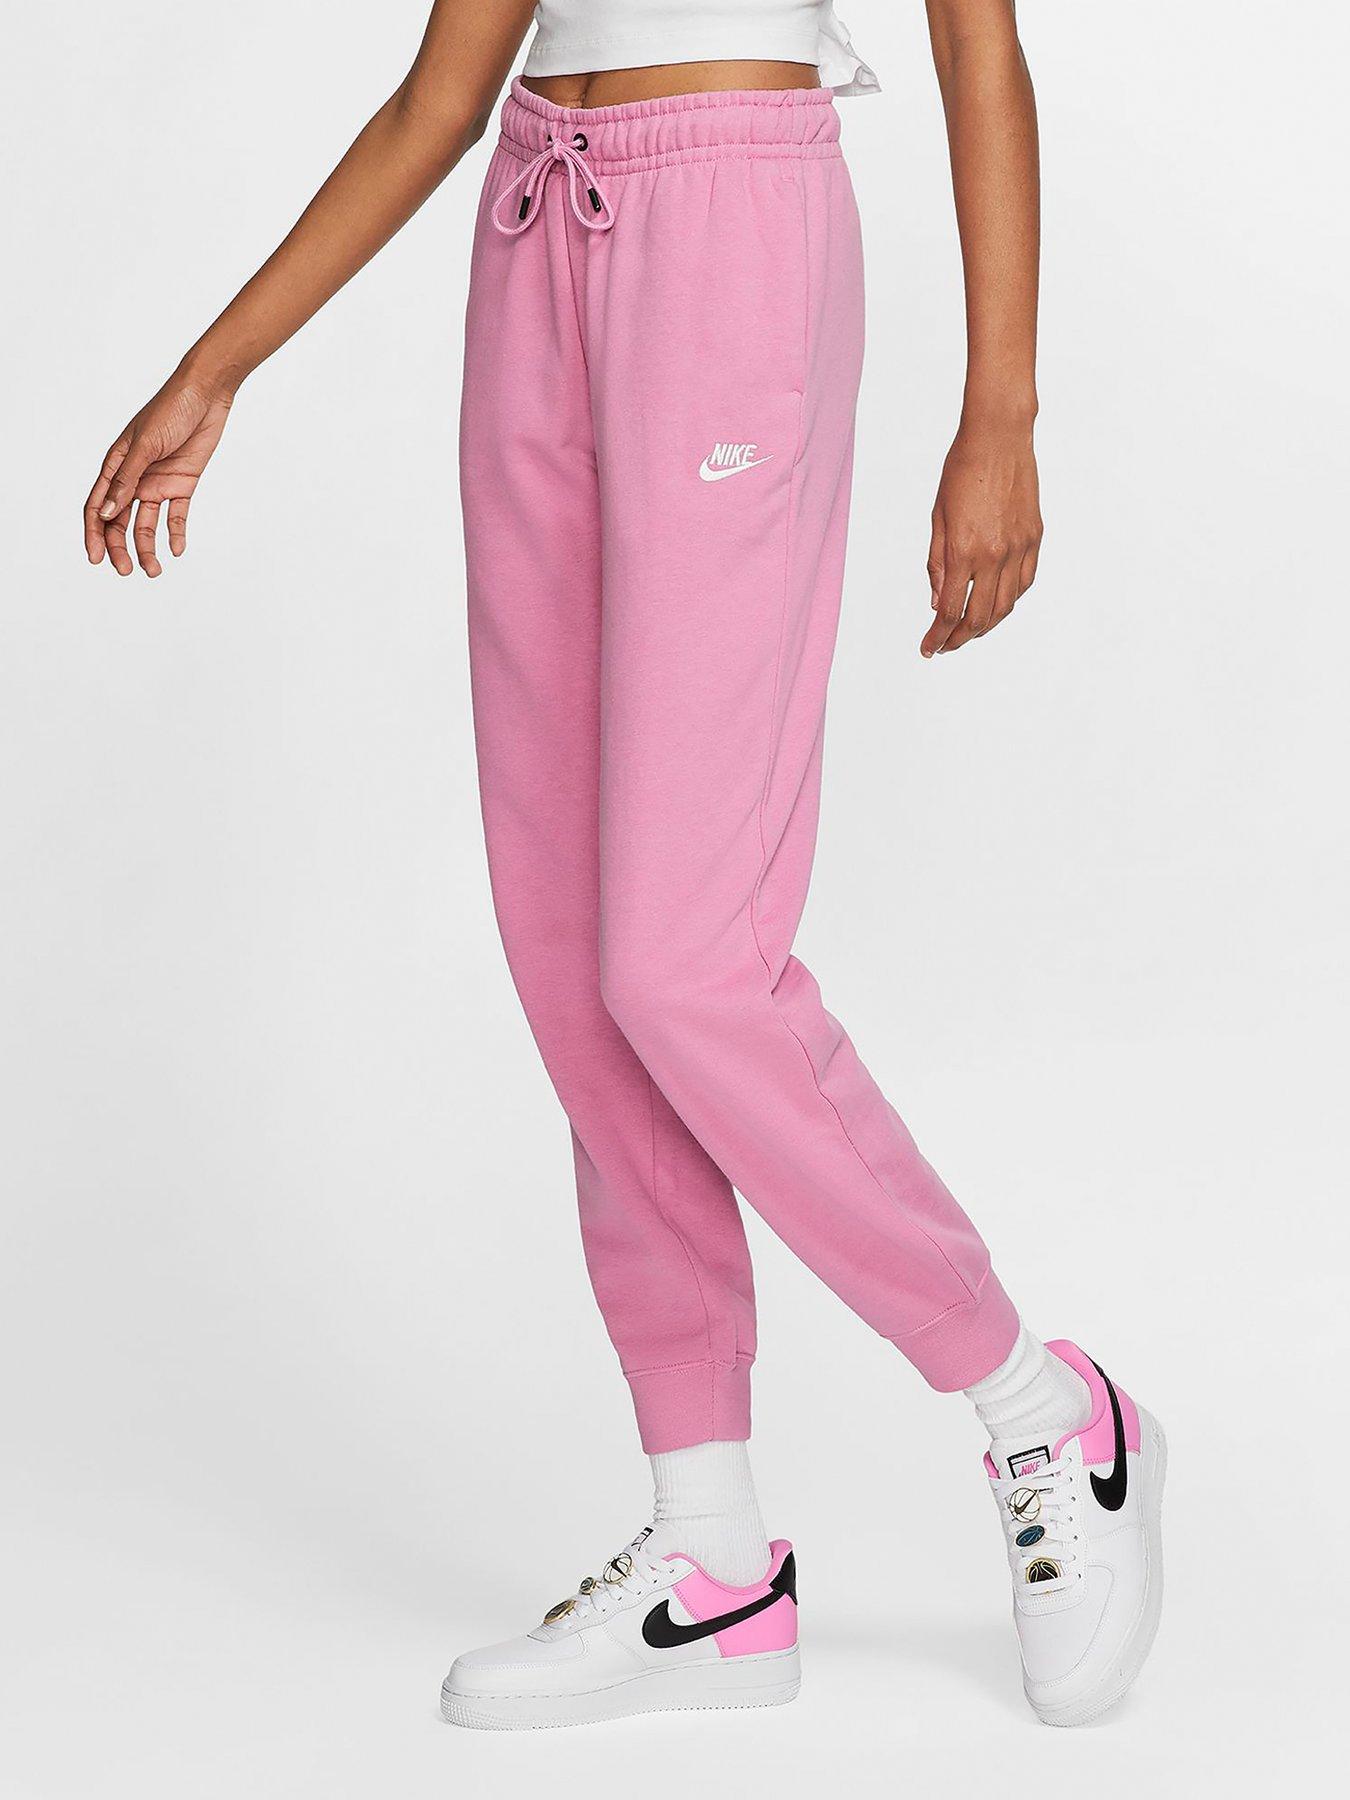 nike hot pink joggers